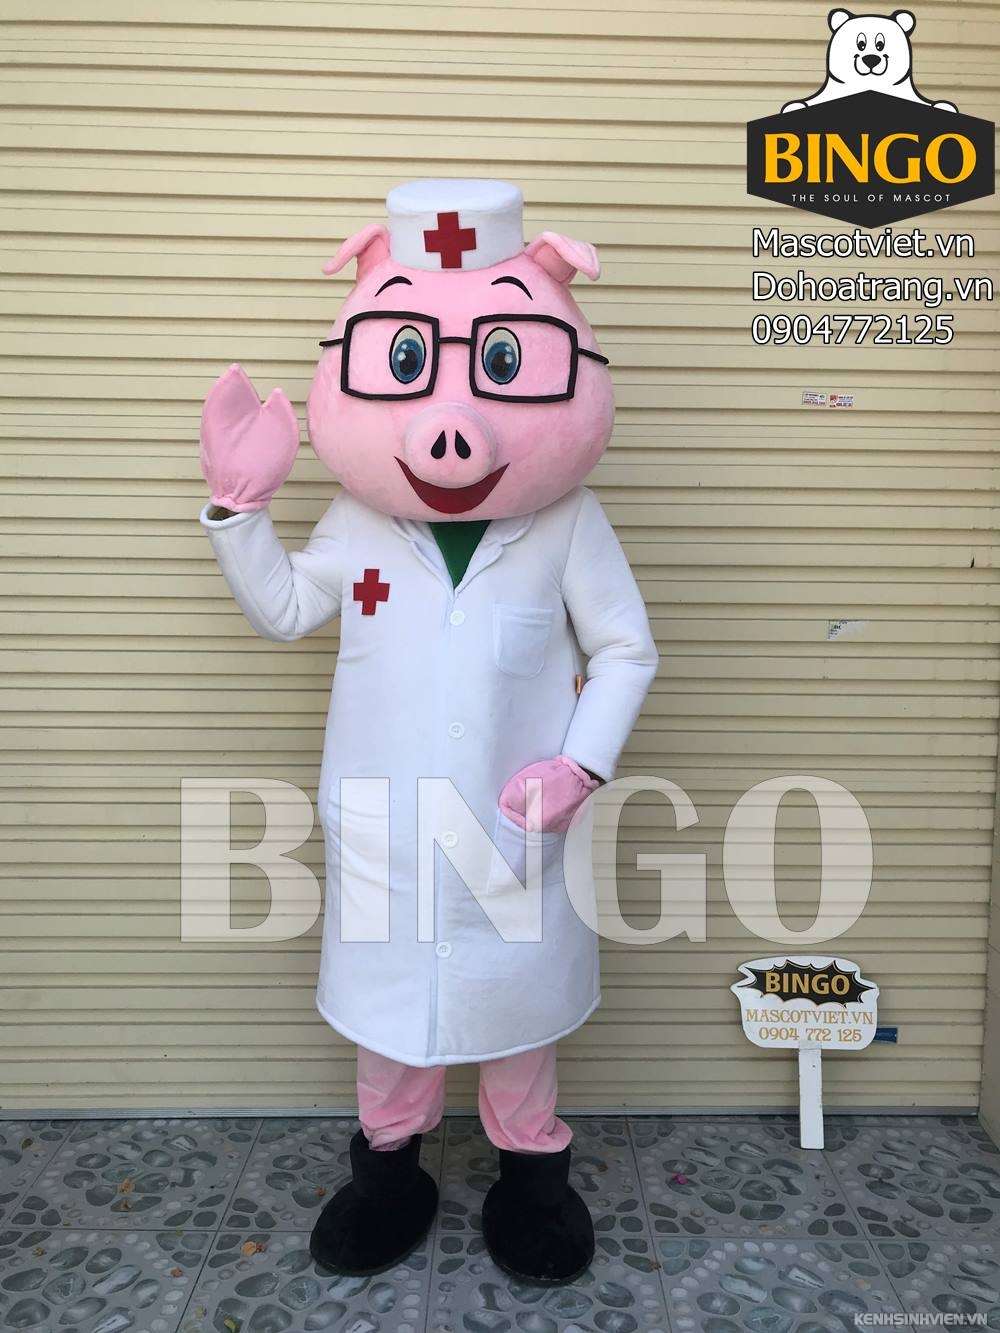 mascot-con-heo-bac-si-bingo-costumes-0904772125-2-.jpg